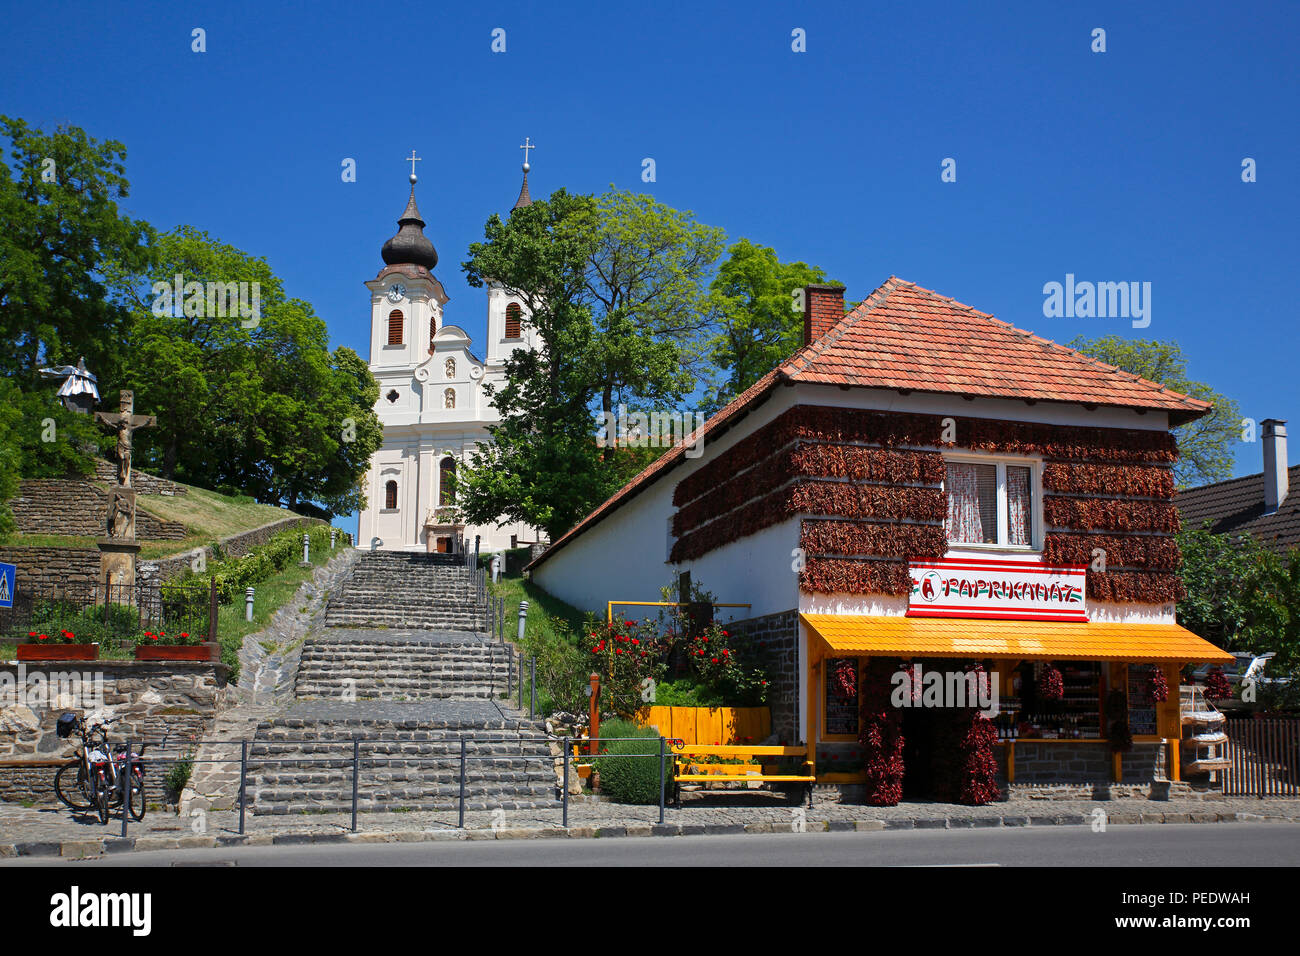 Paprikahaus und Abteikirche Kloster Tihany, Tihany auf Halbinsel Tihany, Plattensee, Ungarn Stock Photo